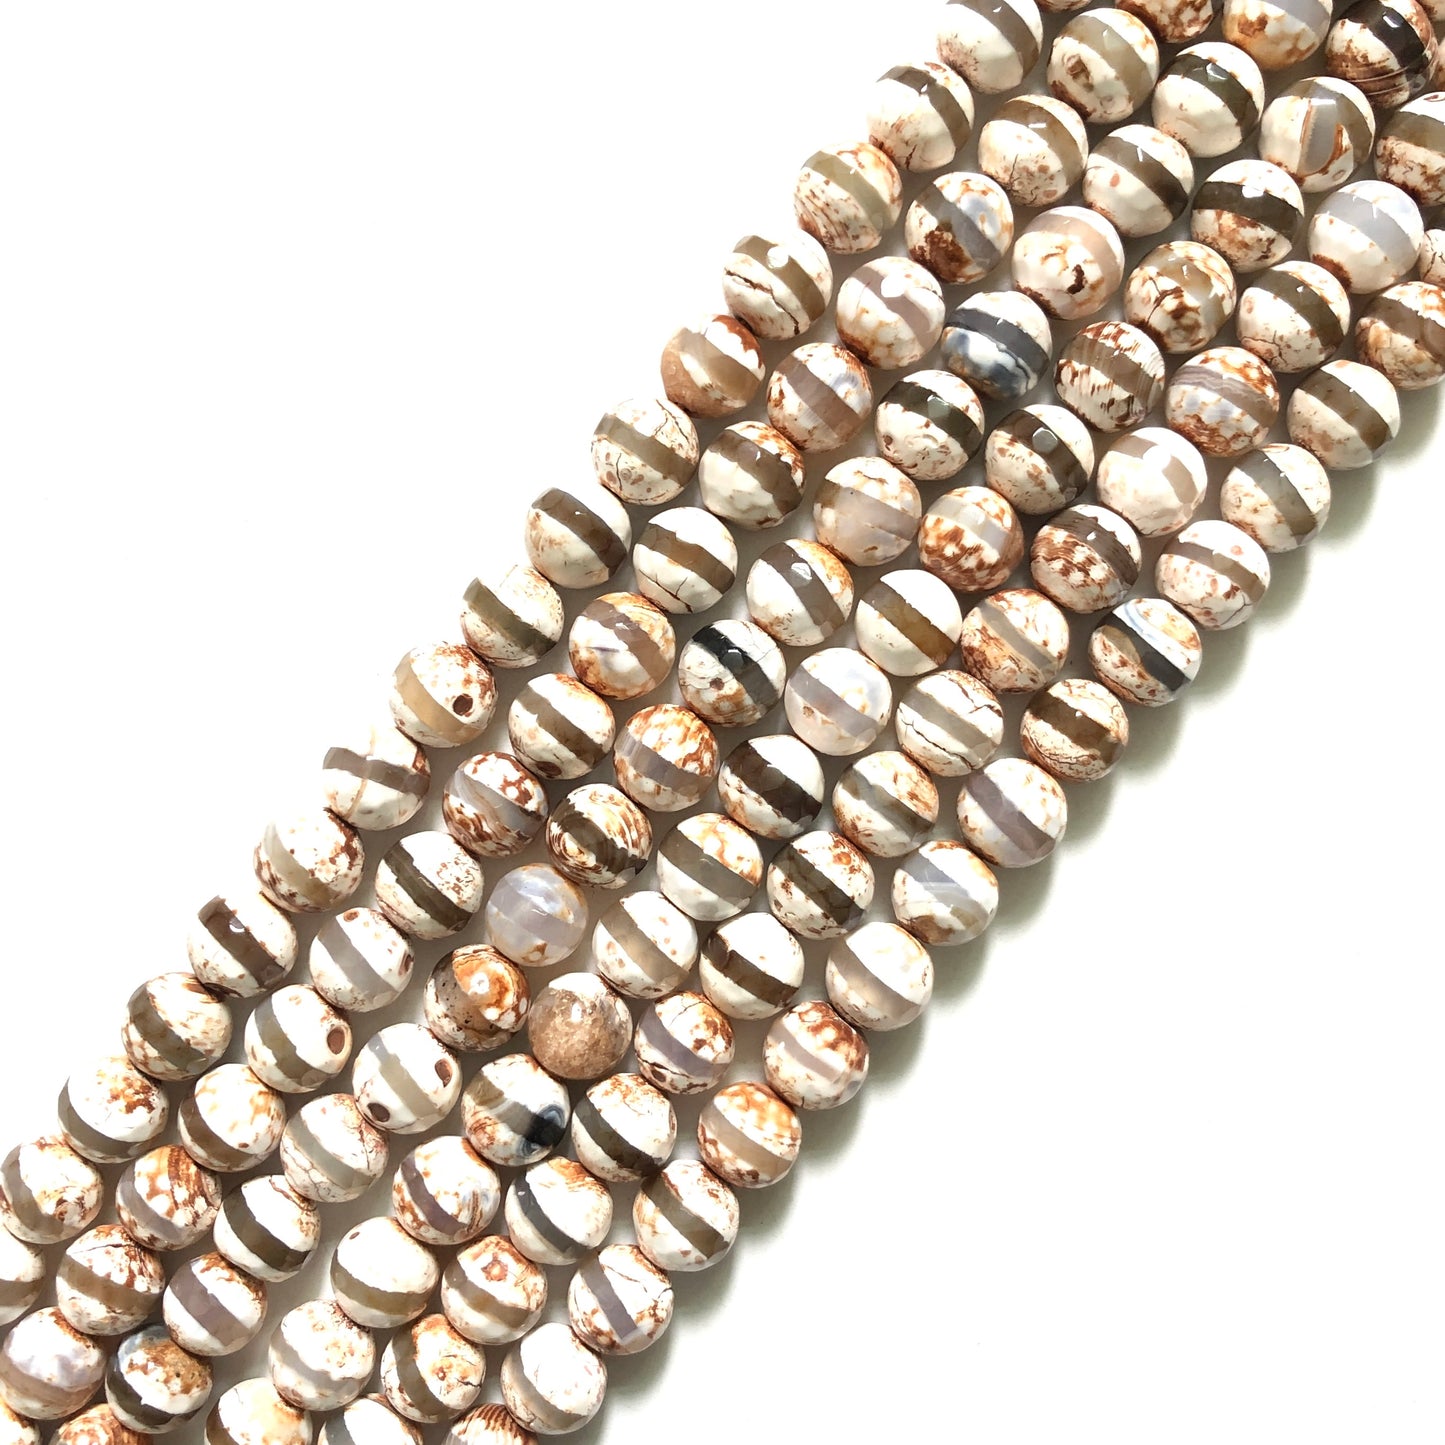 10mm Clear Stripe Brown Faceted Tibetan Agate Stone Beads Stone Beads Tibetan Beads Charms Beads Beyond